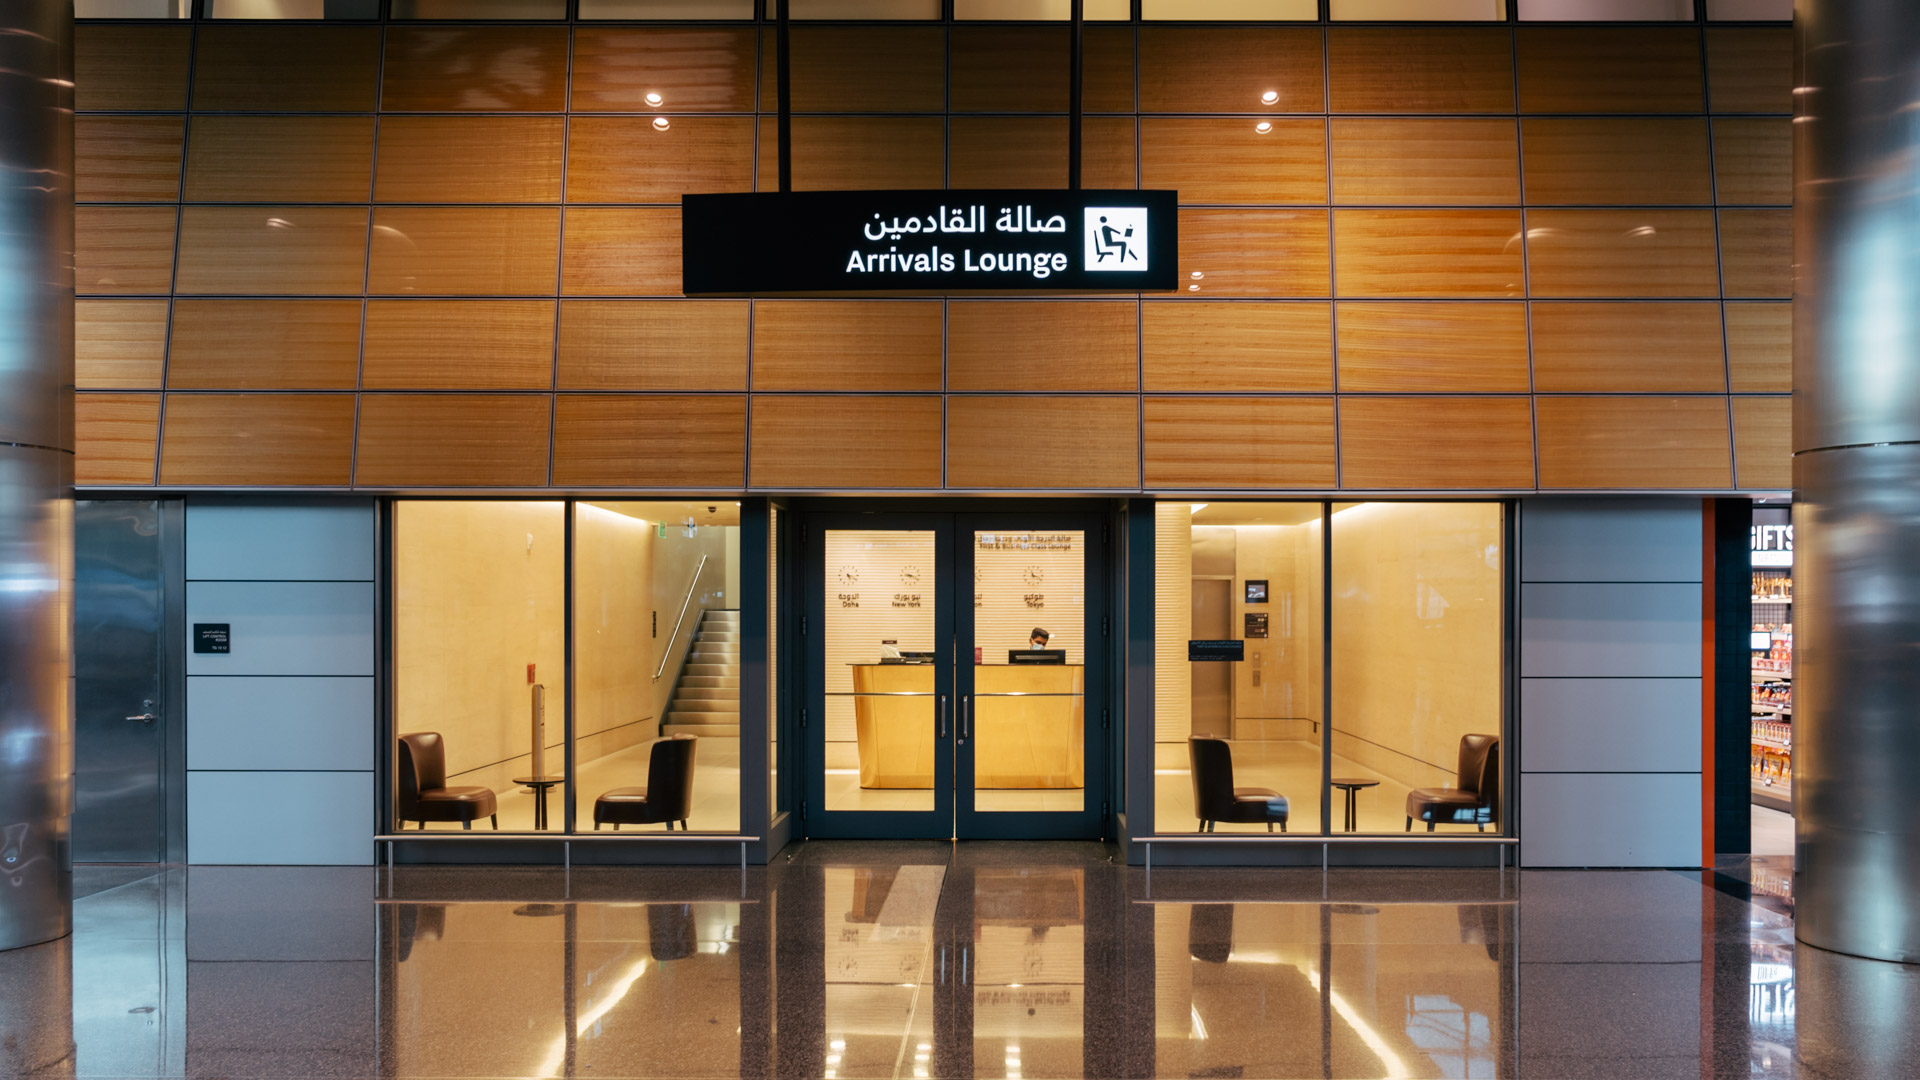 Qatar Airways Arrival Lounge entrance